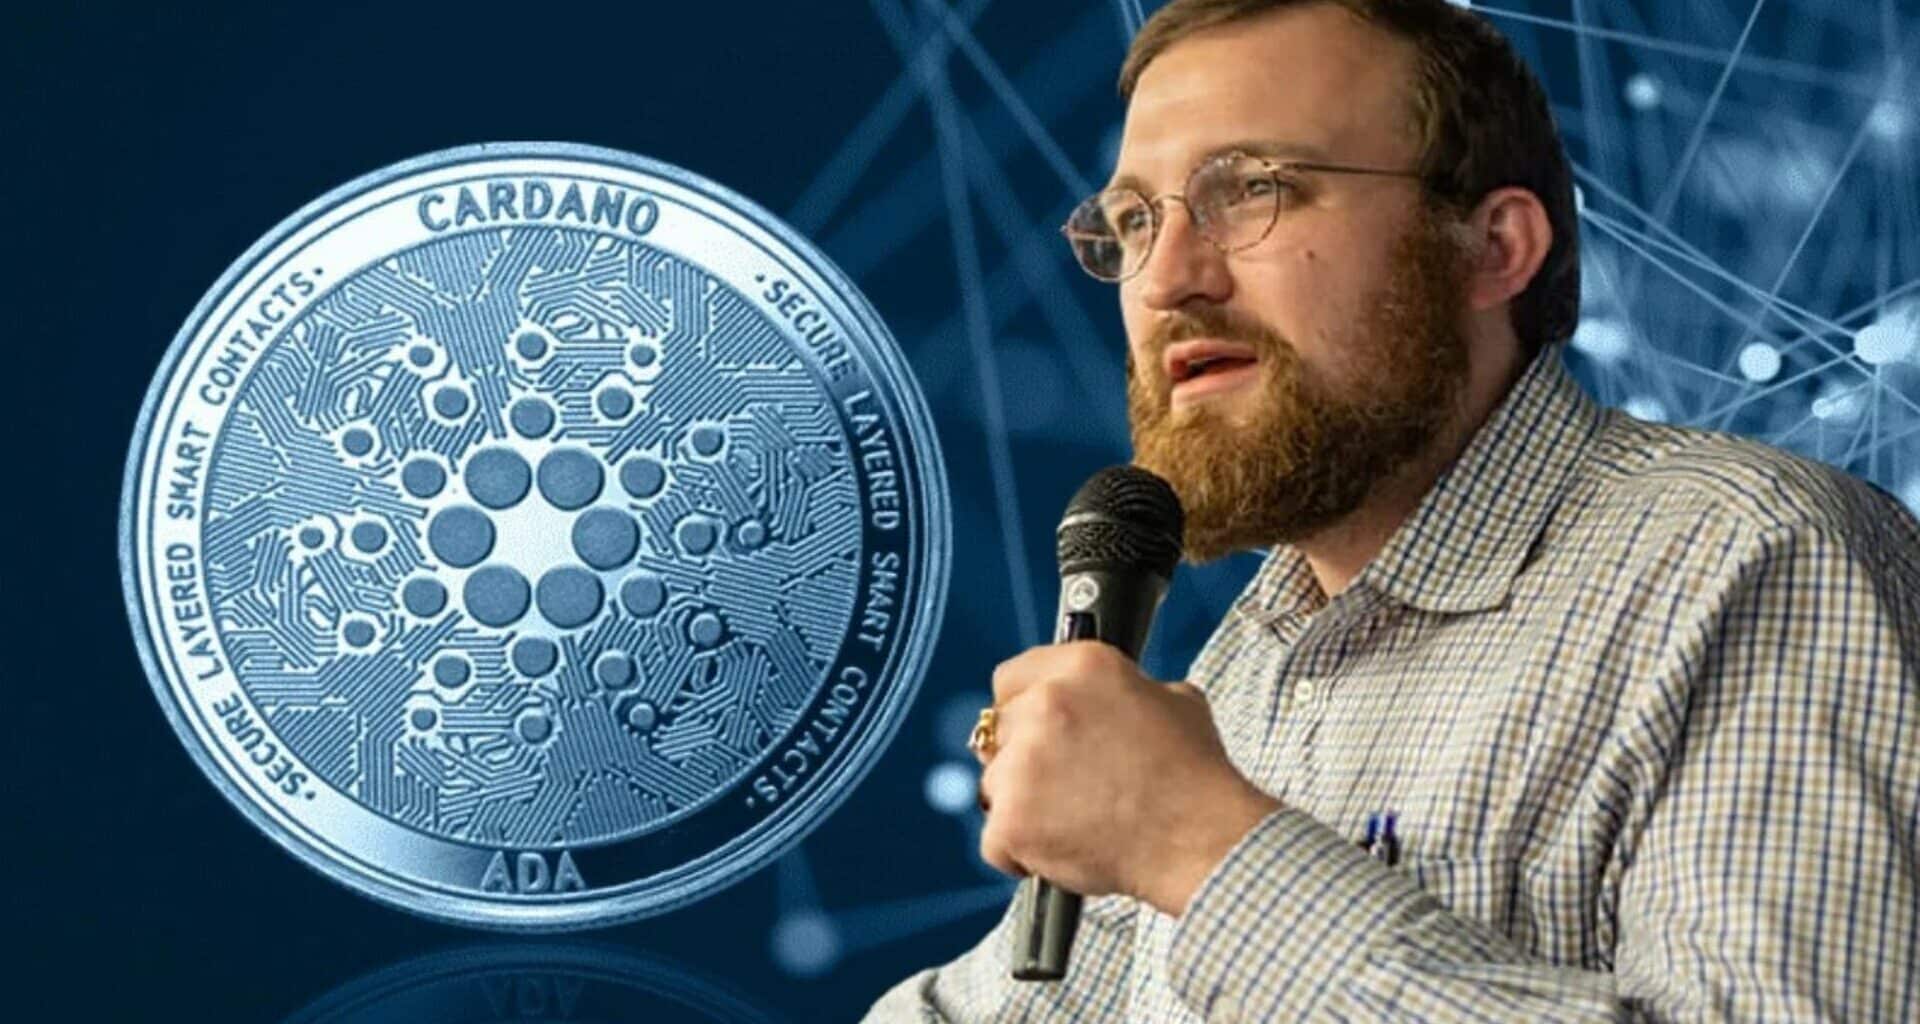 Cardano ADA blockchain token